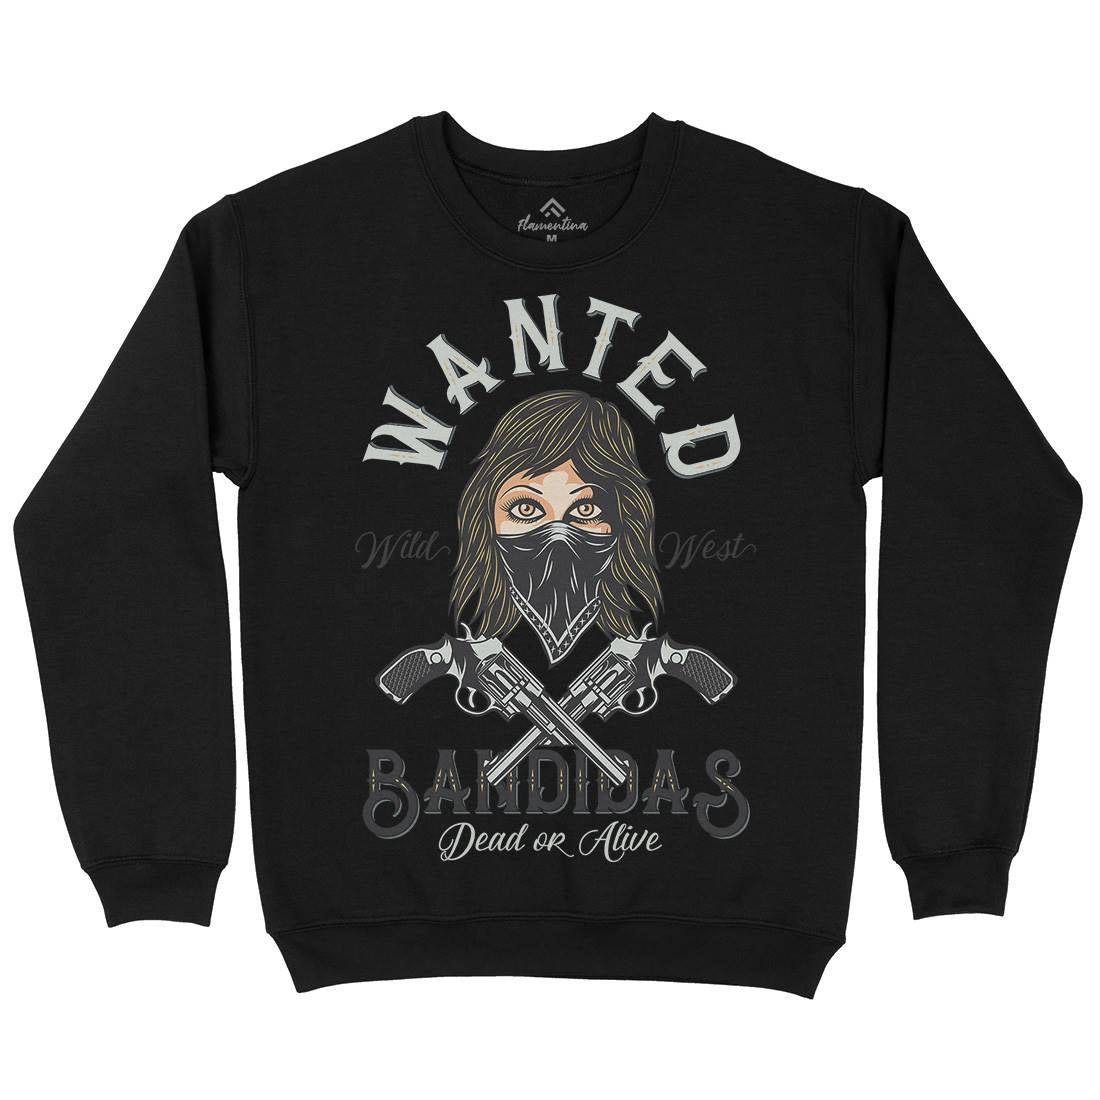 Wanted Bandidas Kids Crew Neck Sweatshirt Retro D995